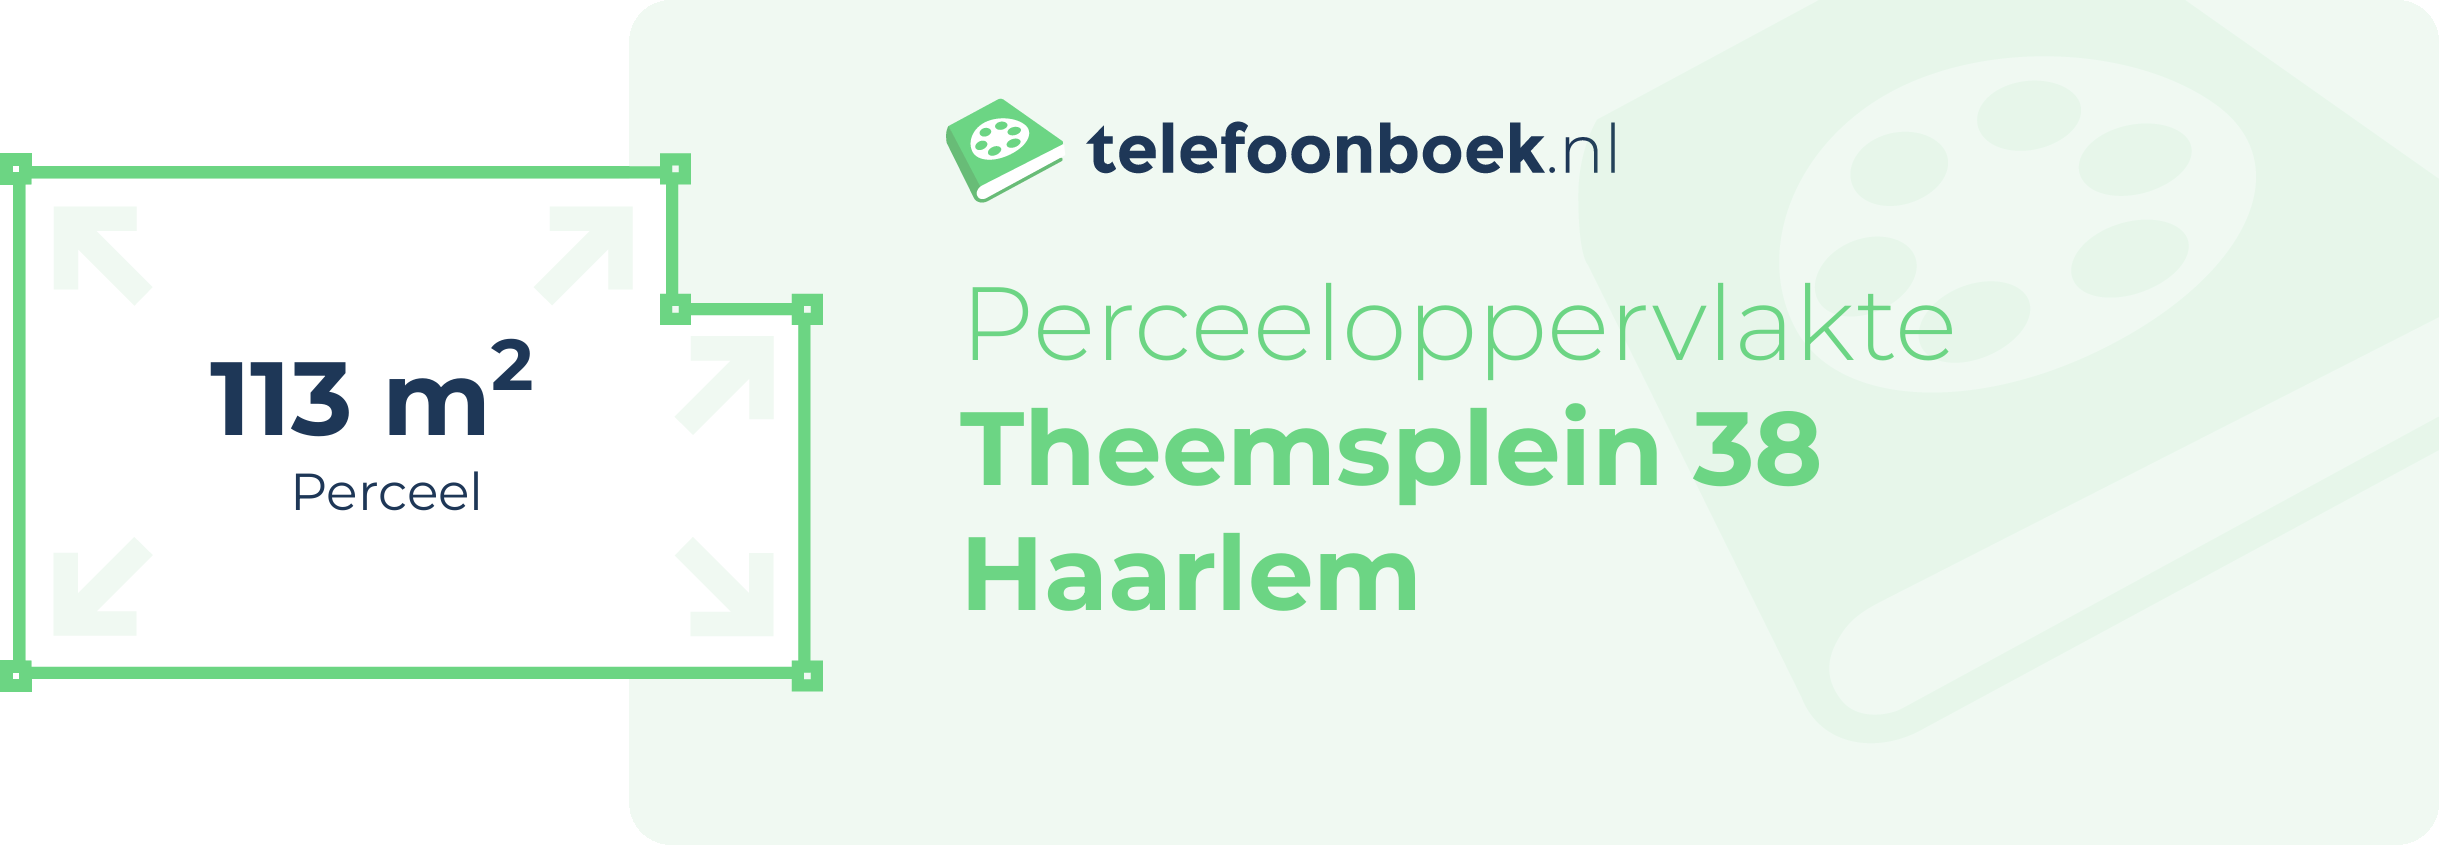 Perceeloppervlakte Theemsplein 38 Haarlem